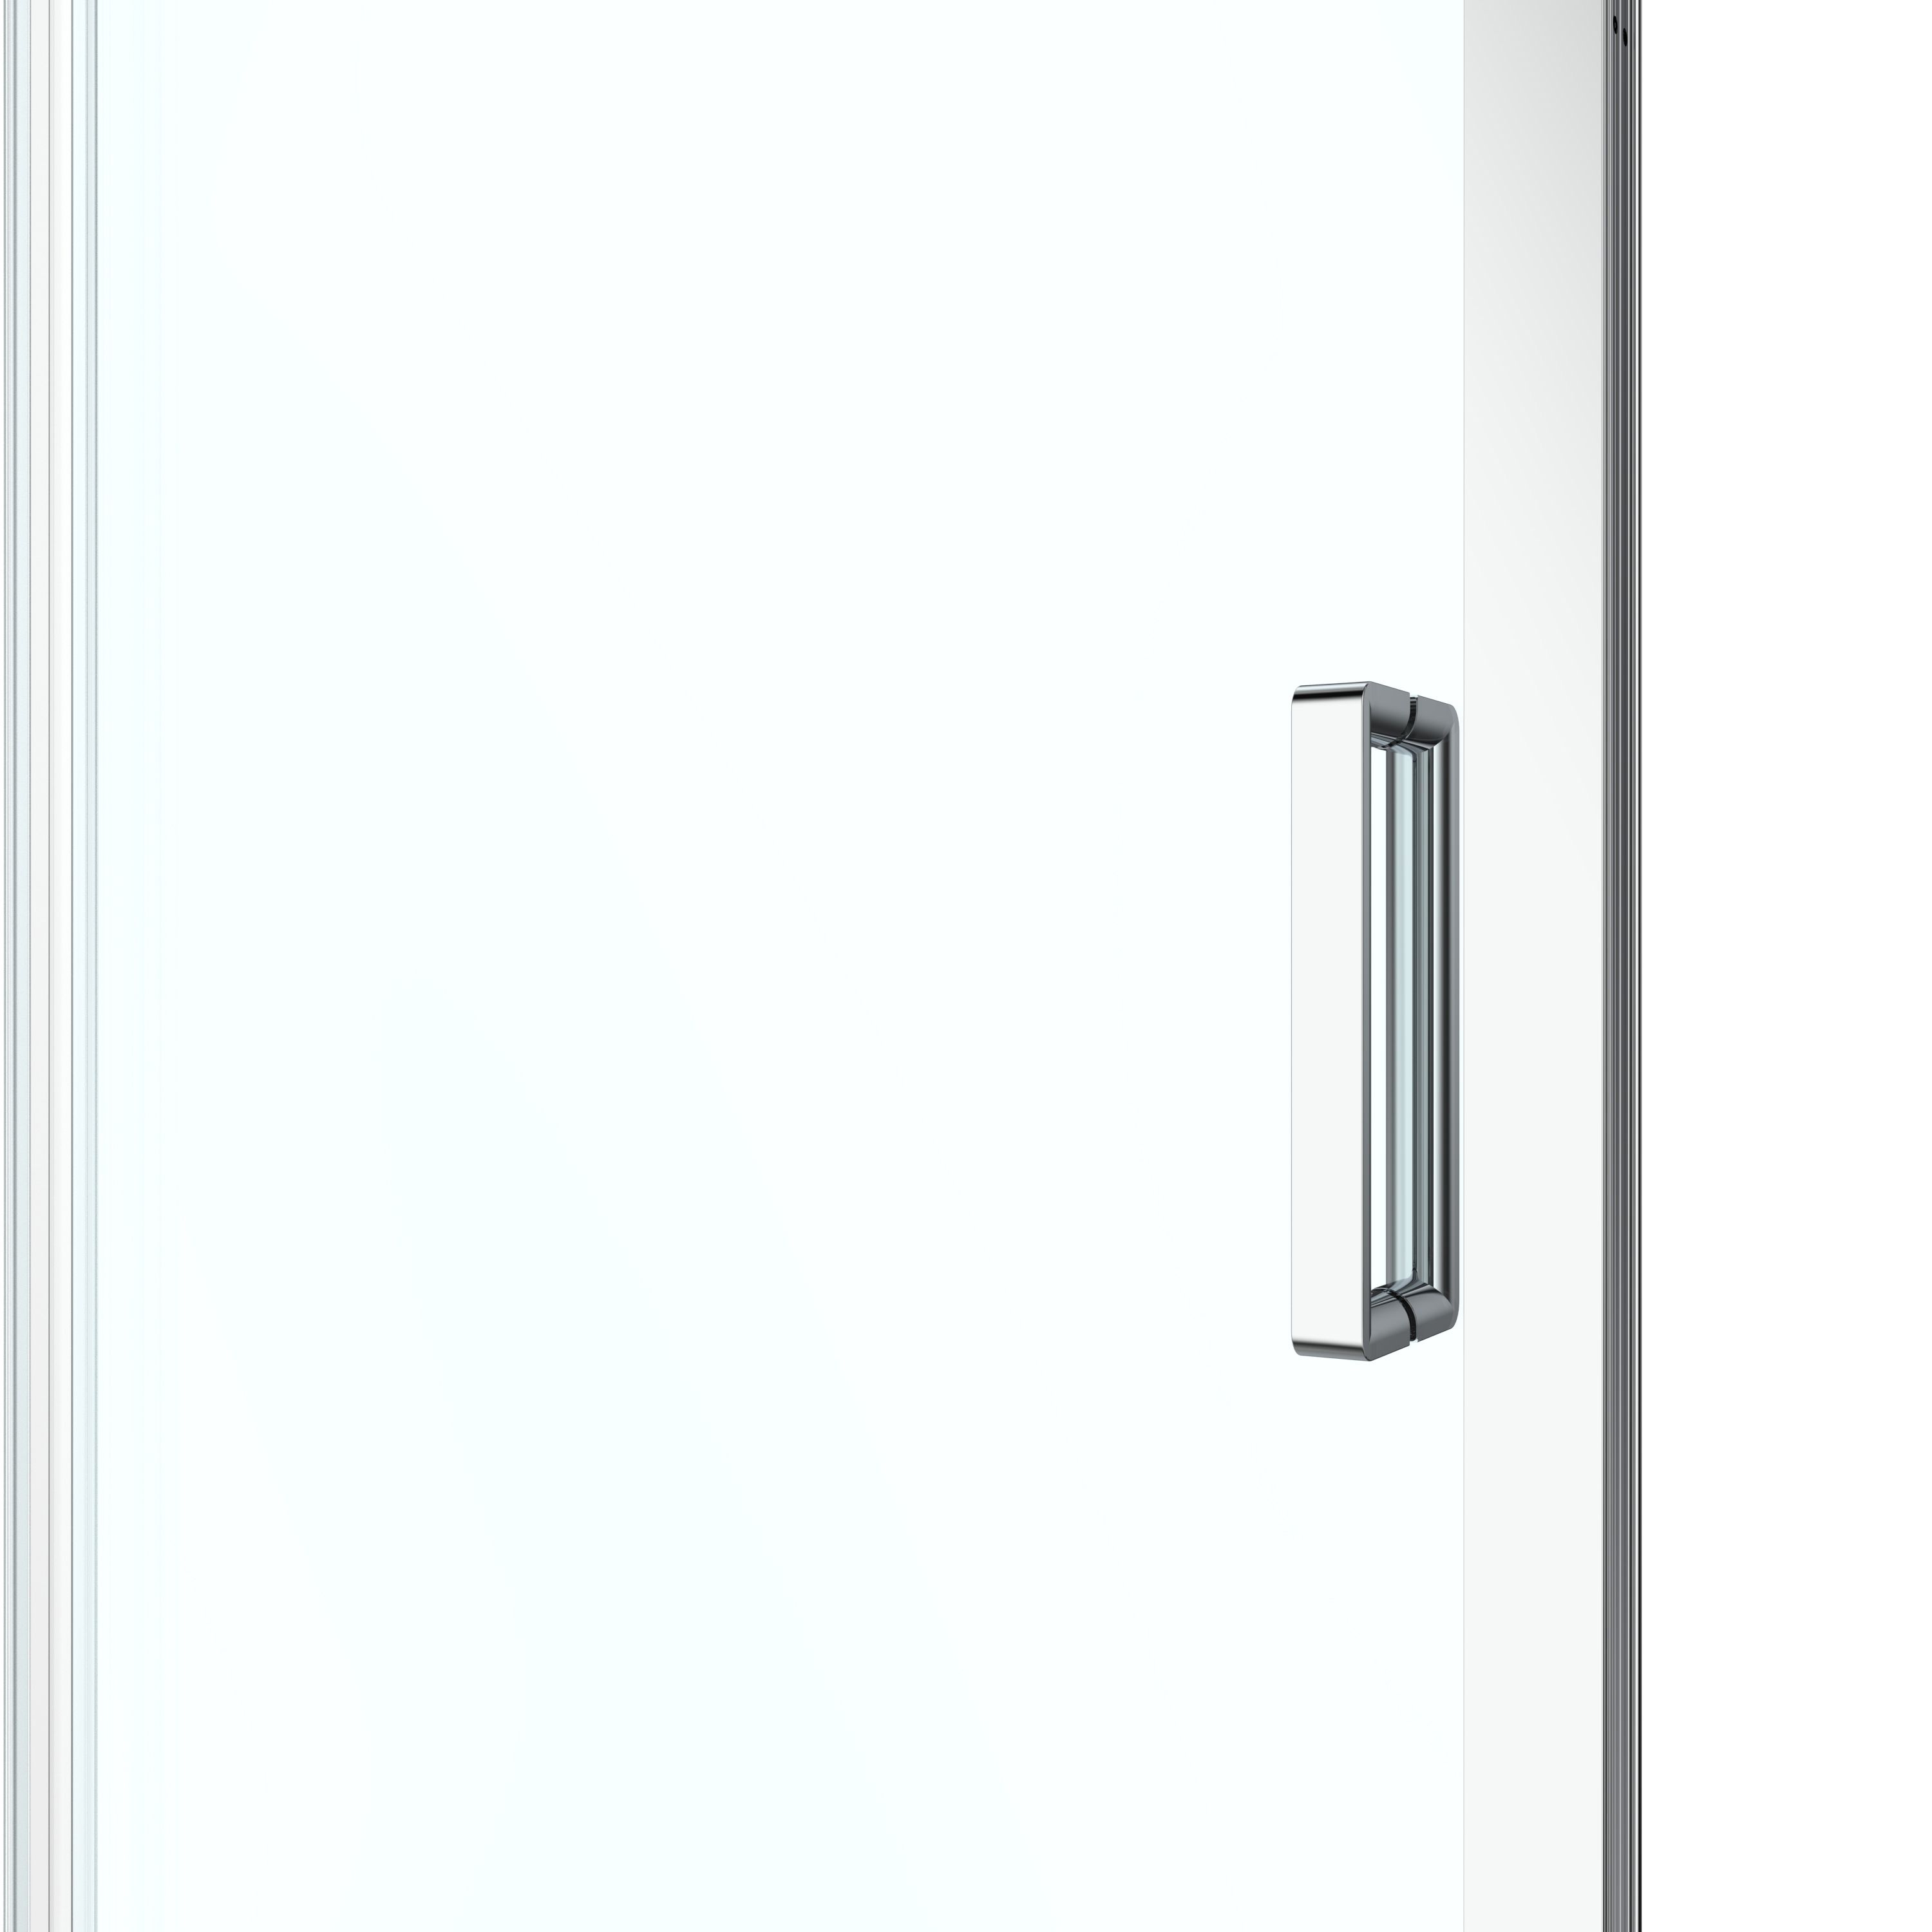 GoodHome Ledava Minimal frame Chrome effect Clear glass Sliding Shower Door (H)195cm (W)160cm